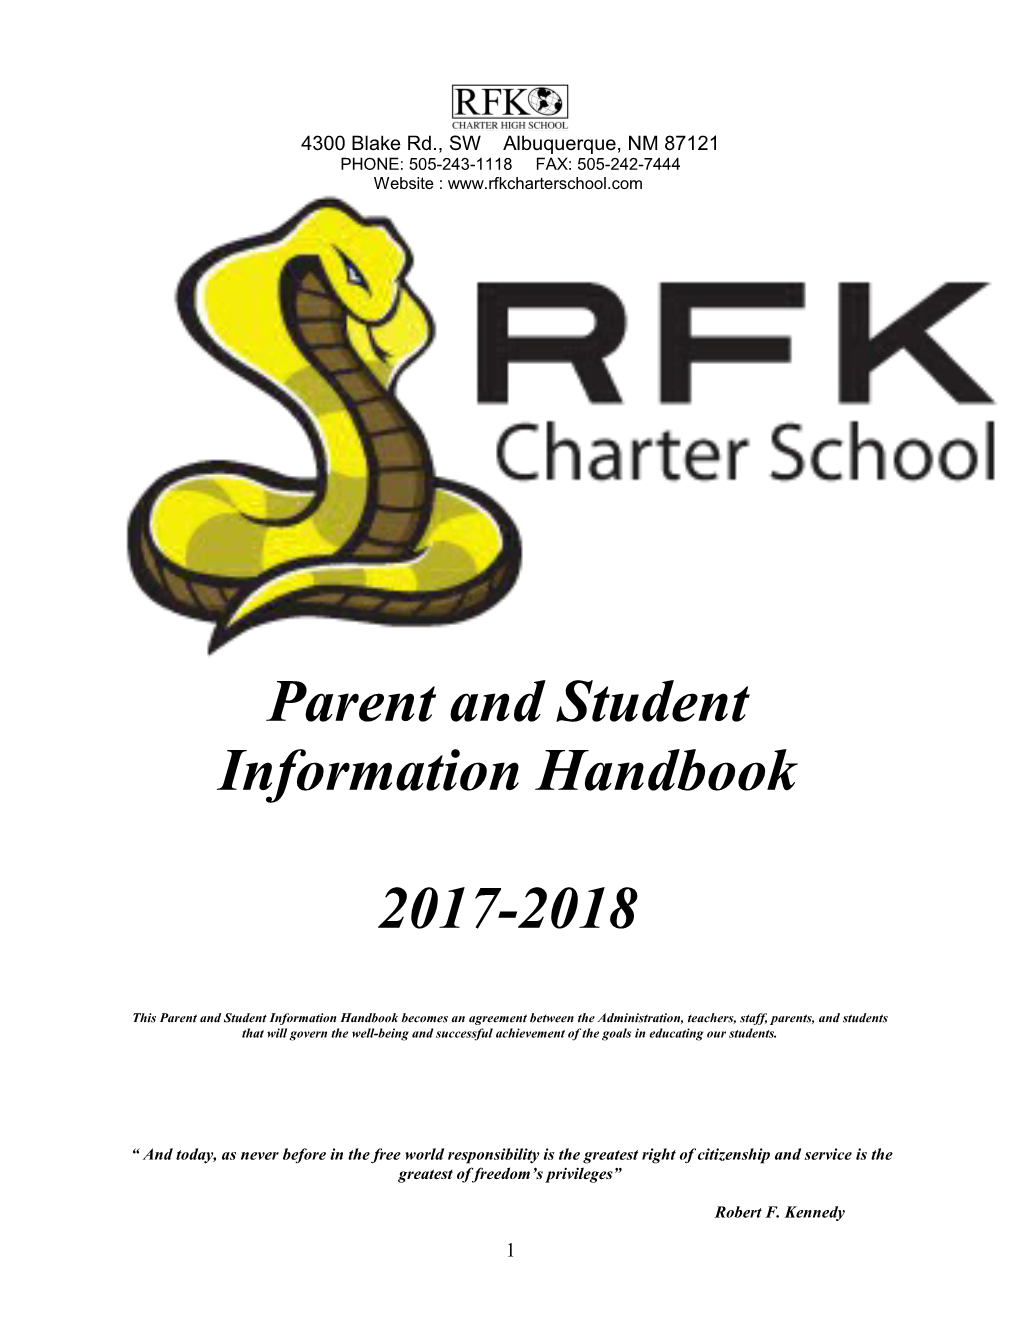 Parent and Student Information Handbook